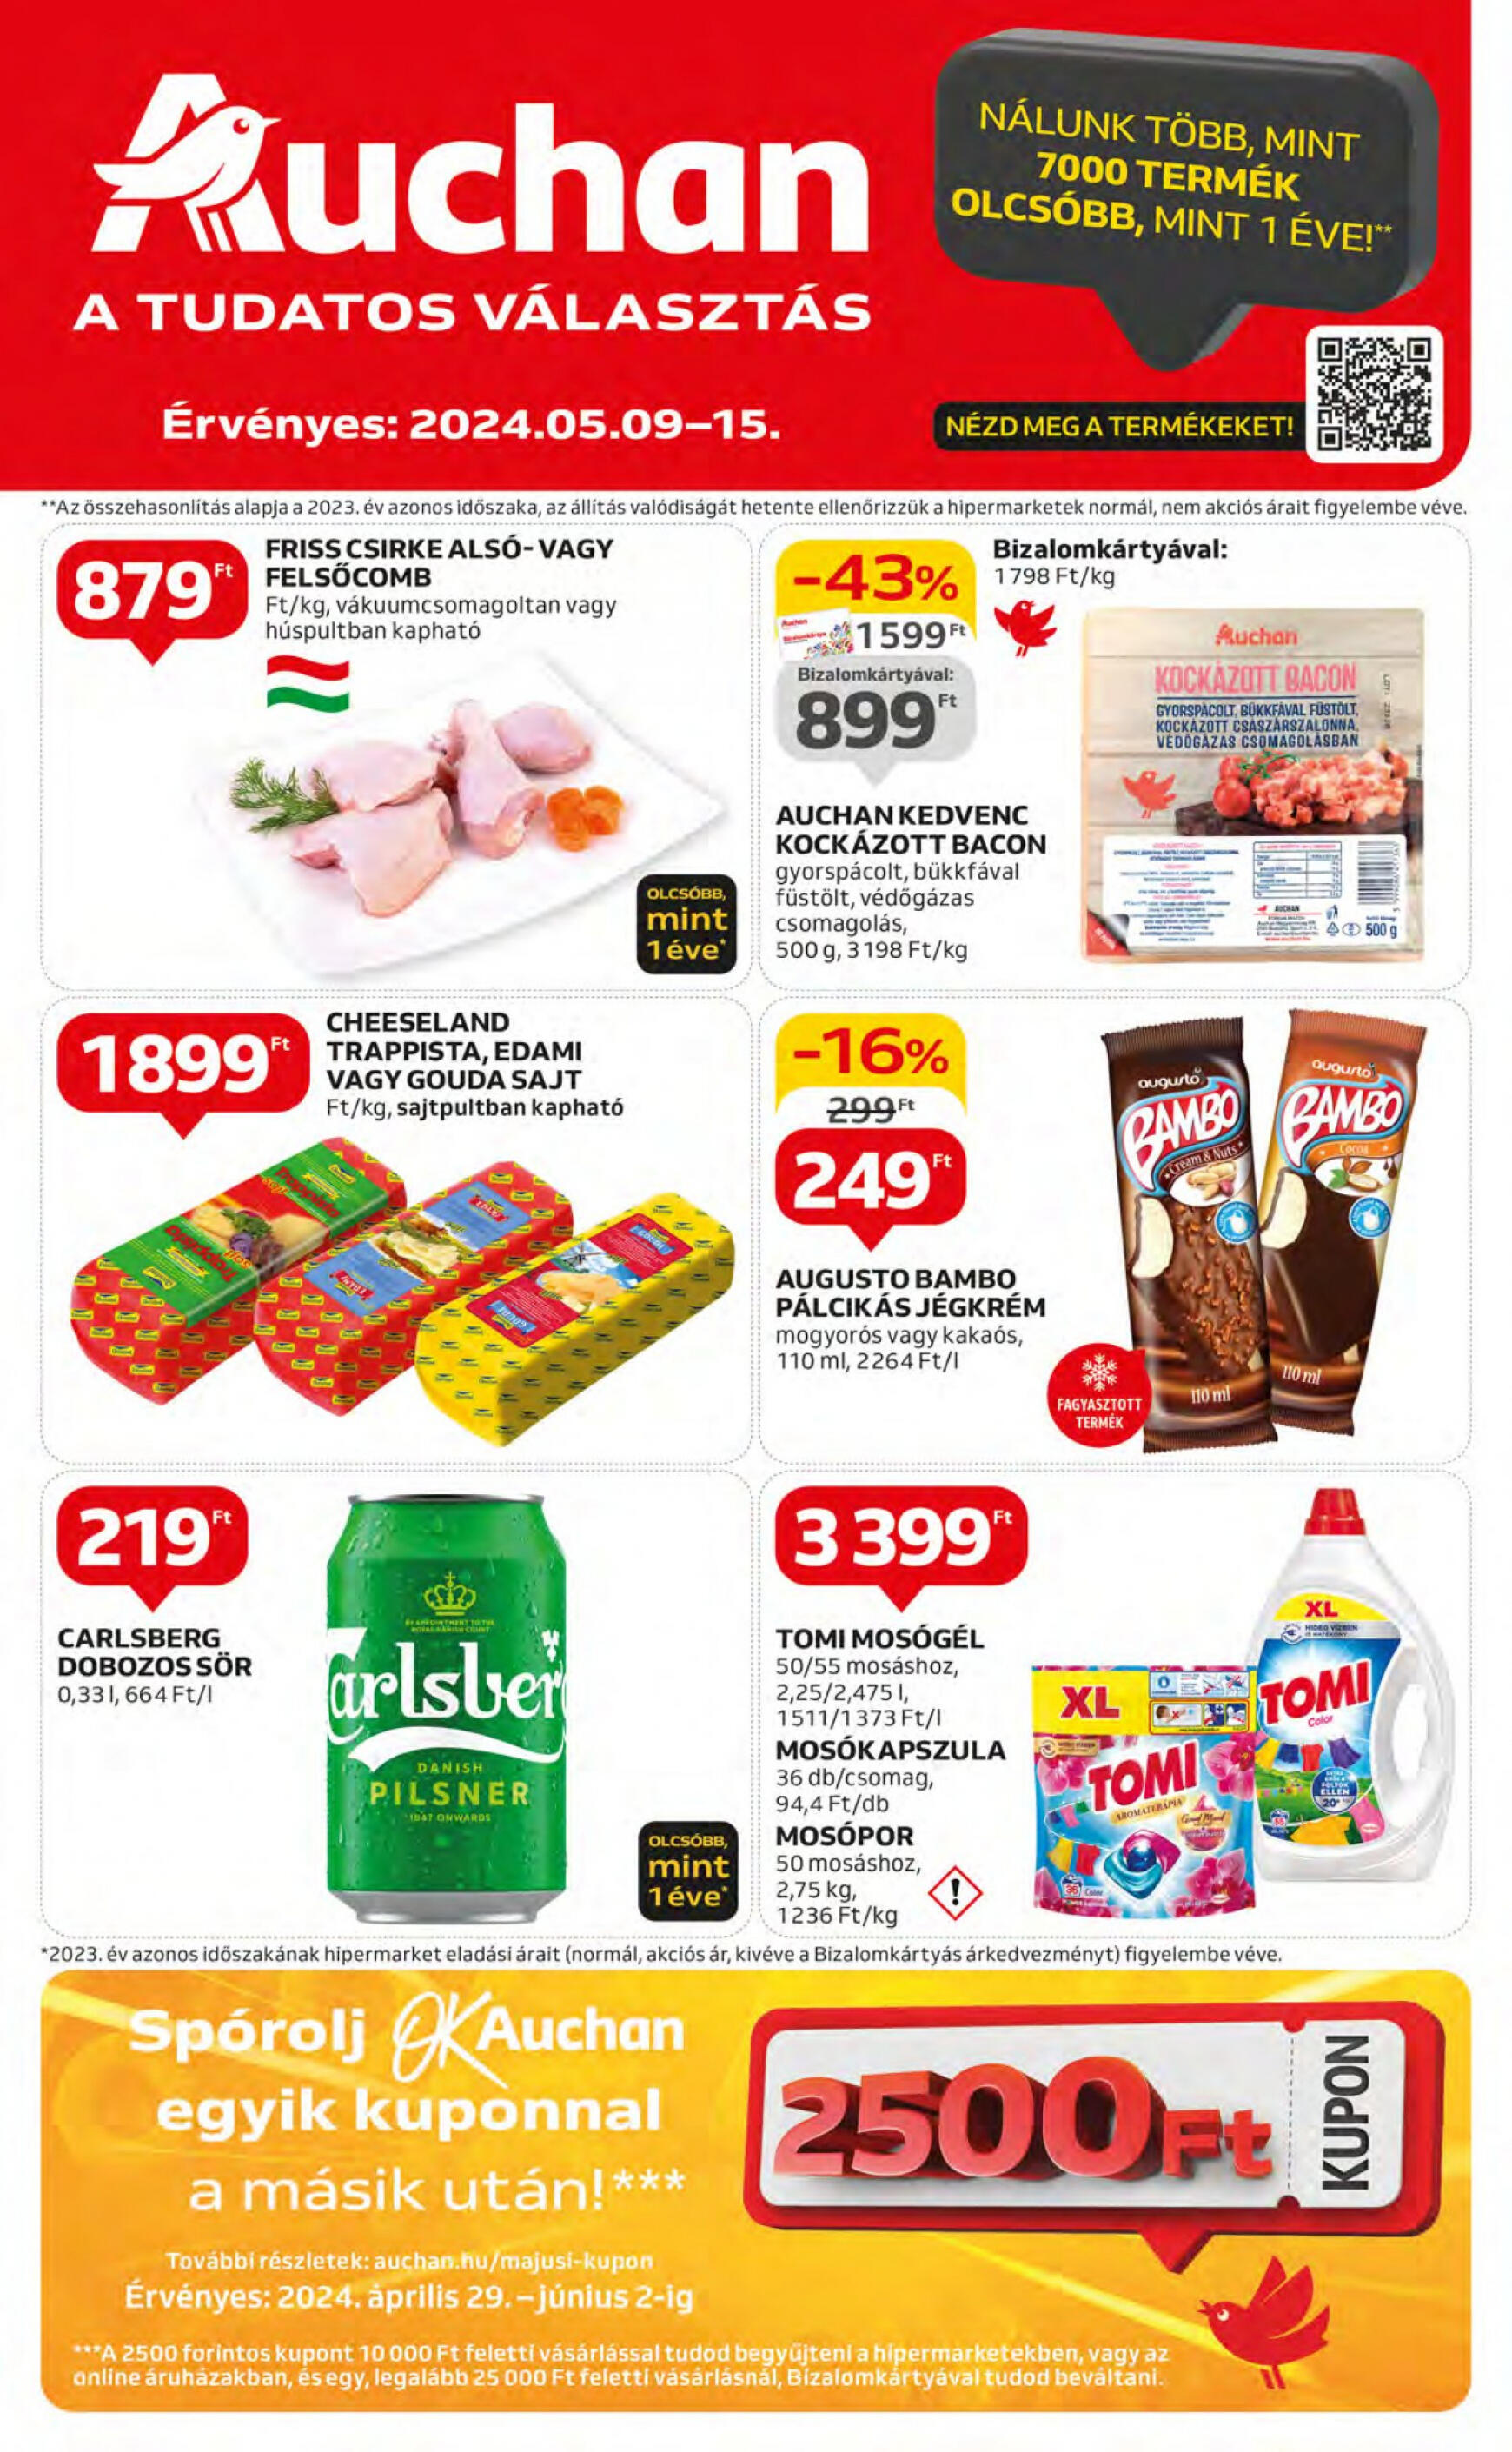 auchan - Aktuális újság Auchan 05.09. - 05.15. - page: 1